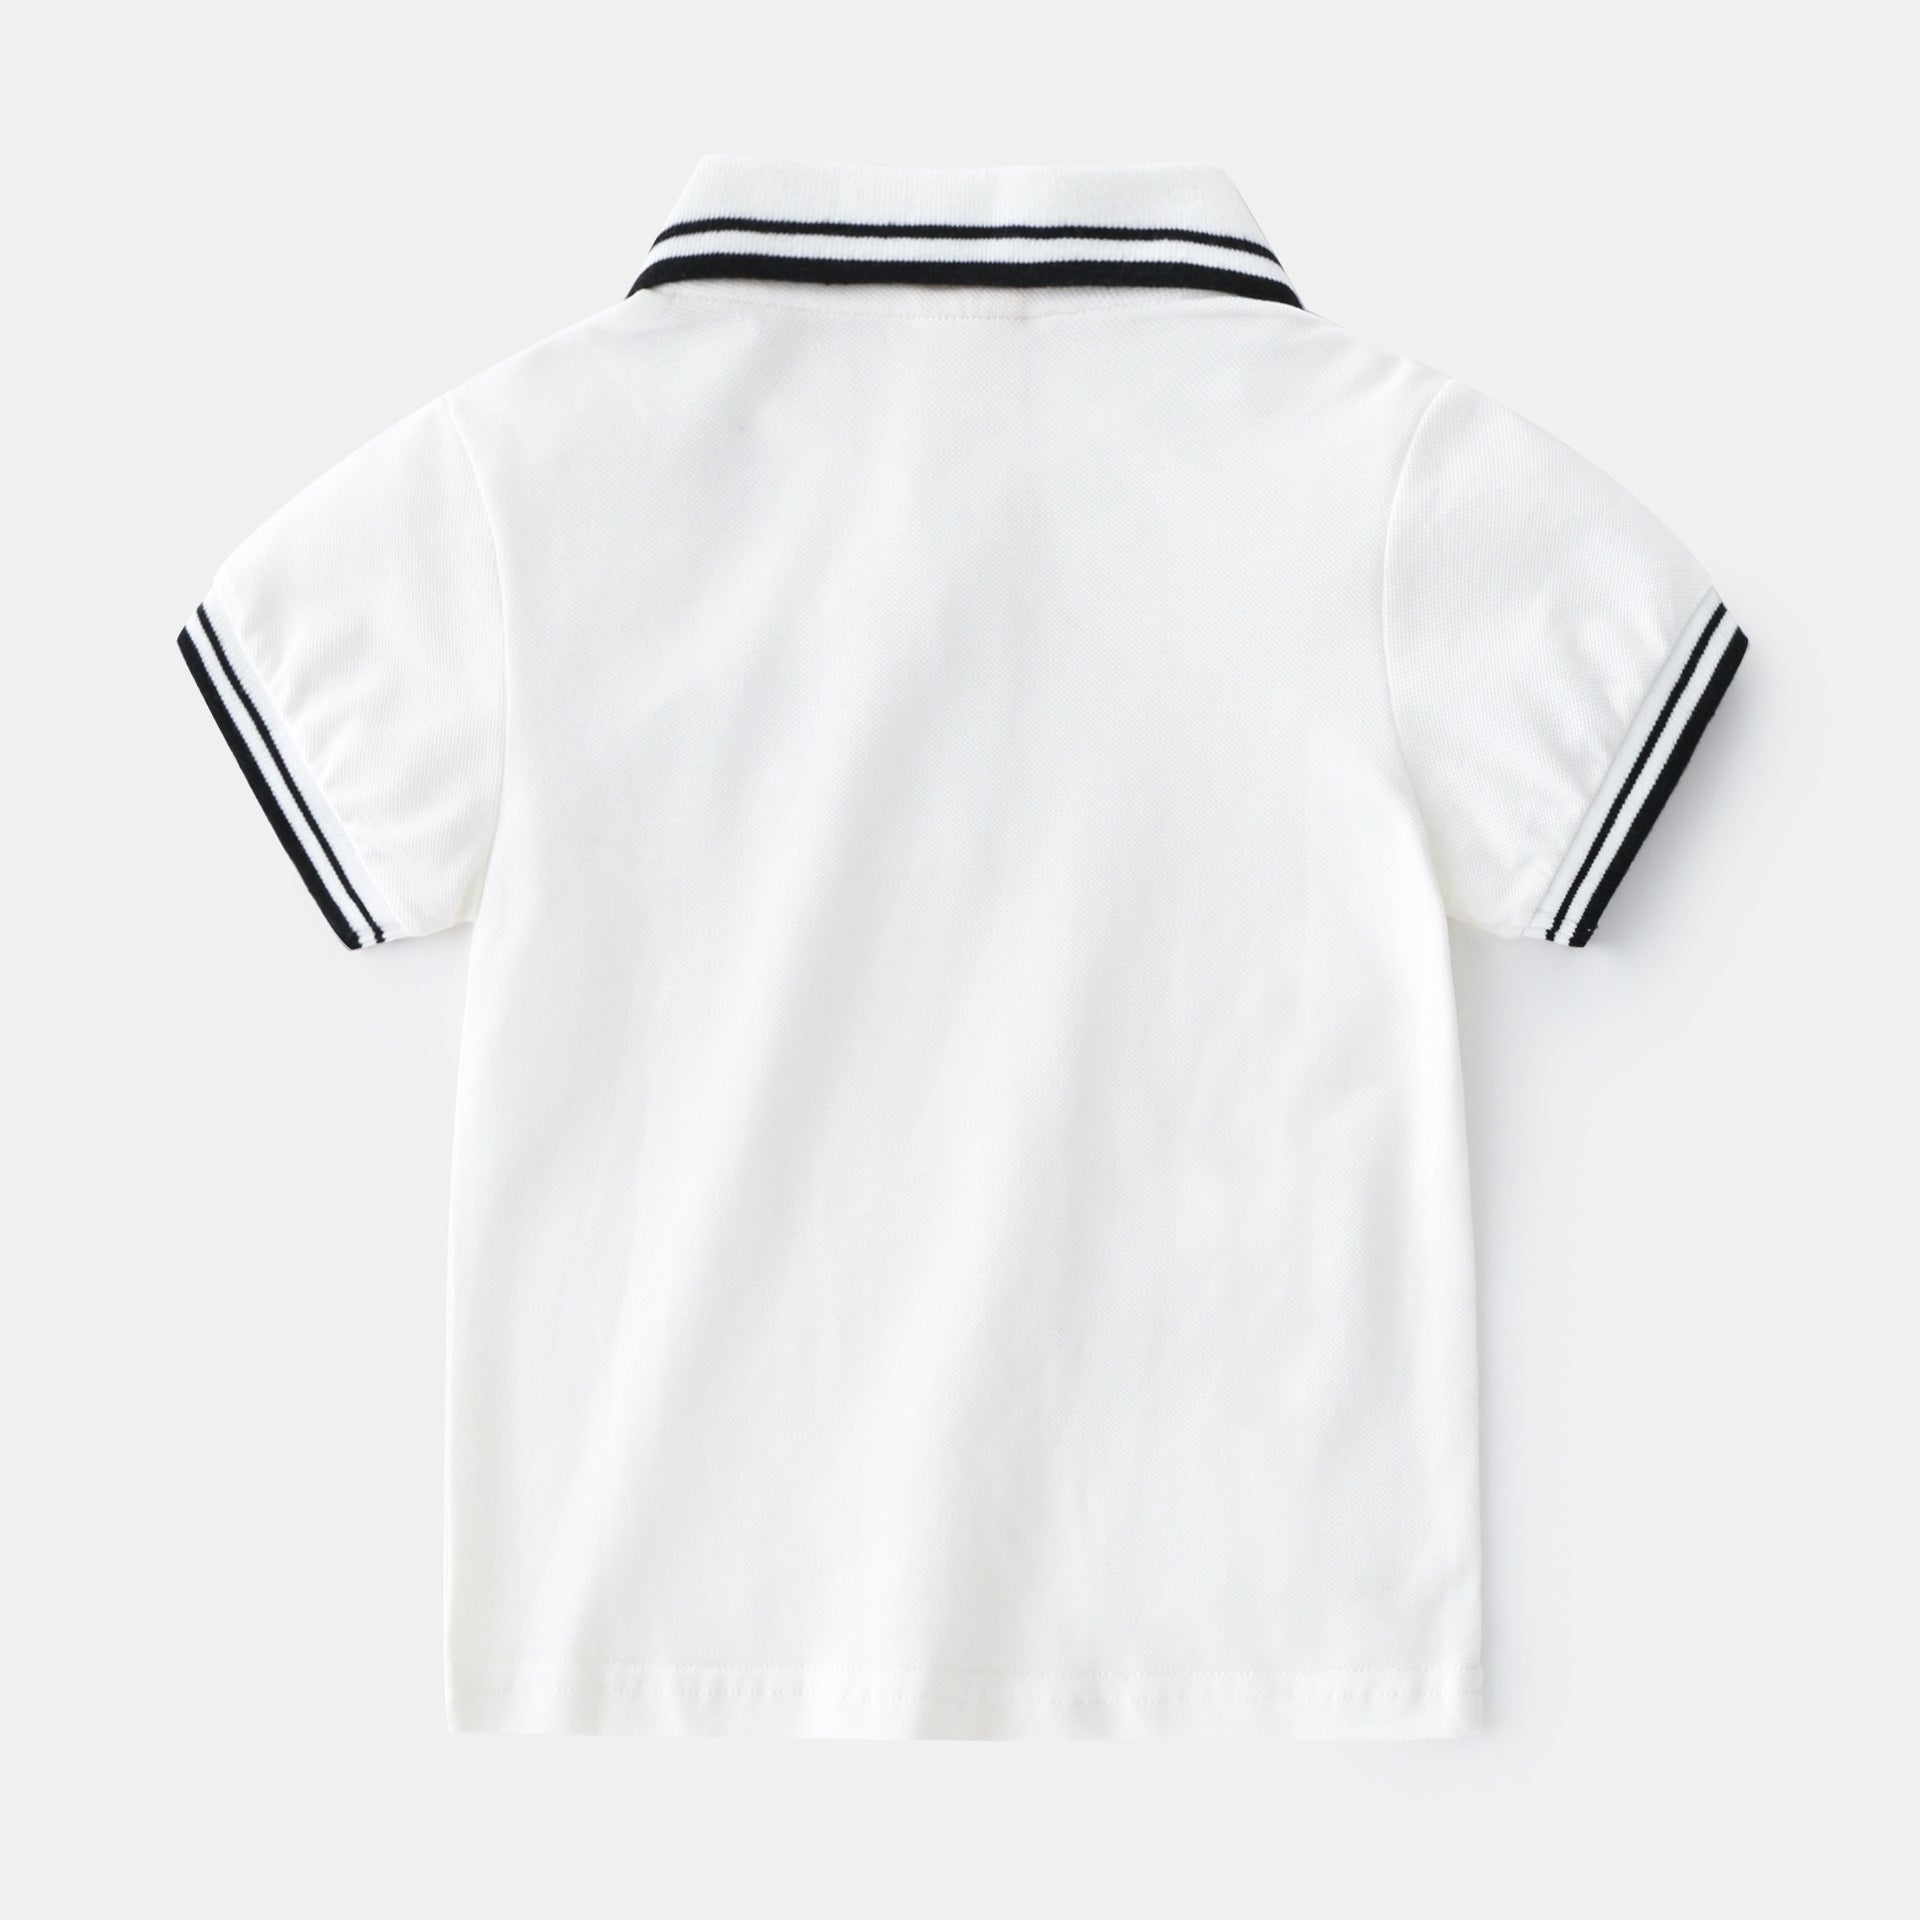 Kids Casual Polo T-Shirt BOYS - ROMART GLOBAL LTD